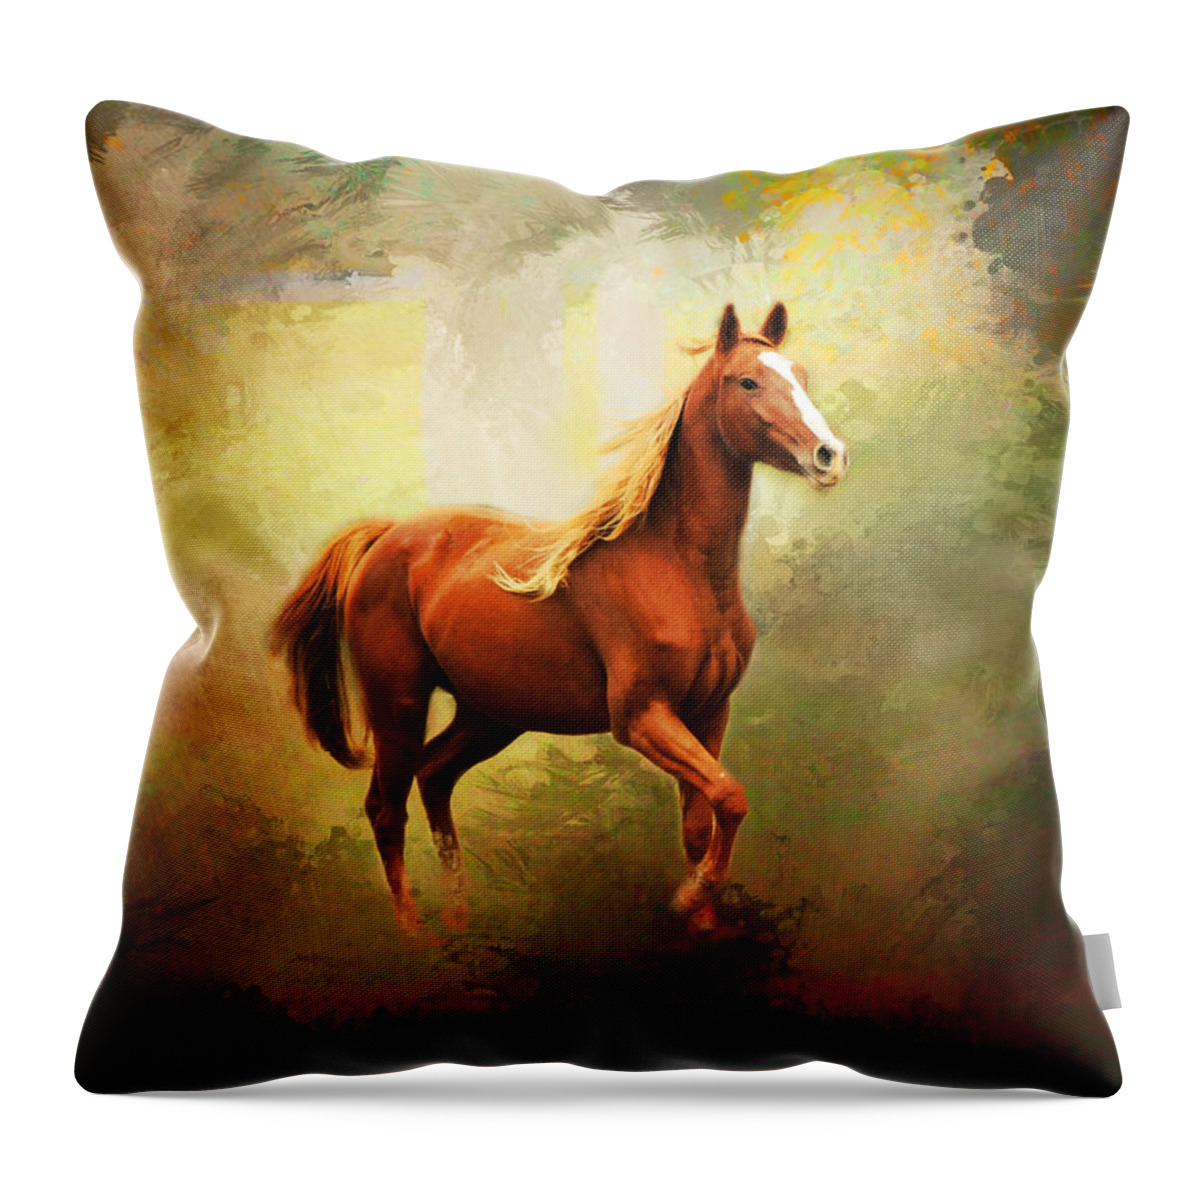 Animal Throw Pillow featuring the photograph Arabian Horse by Jai Johnson